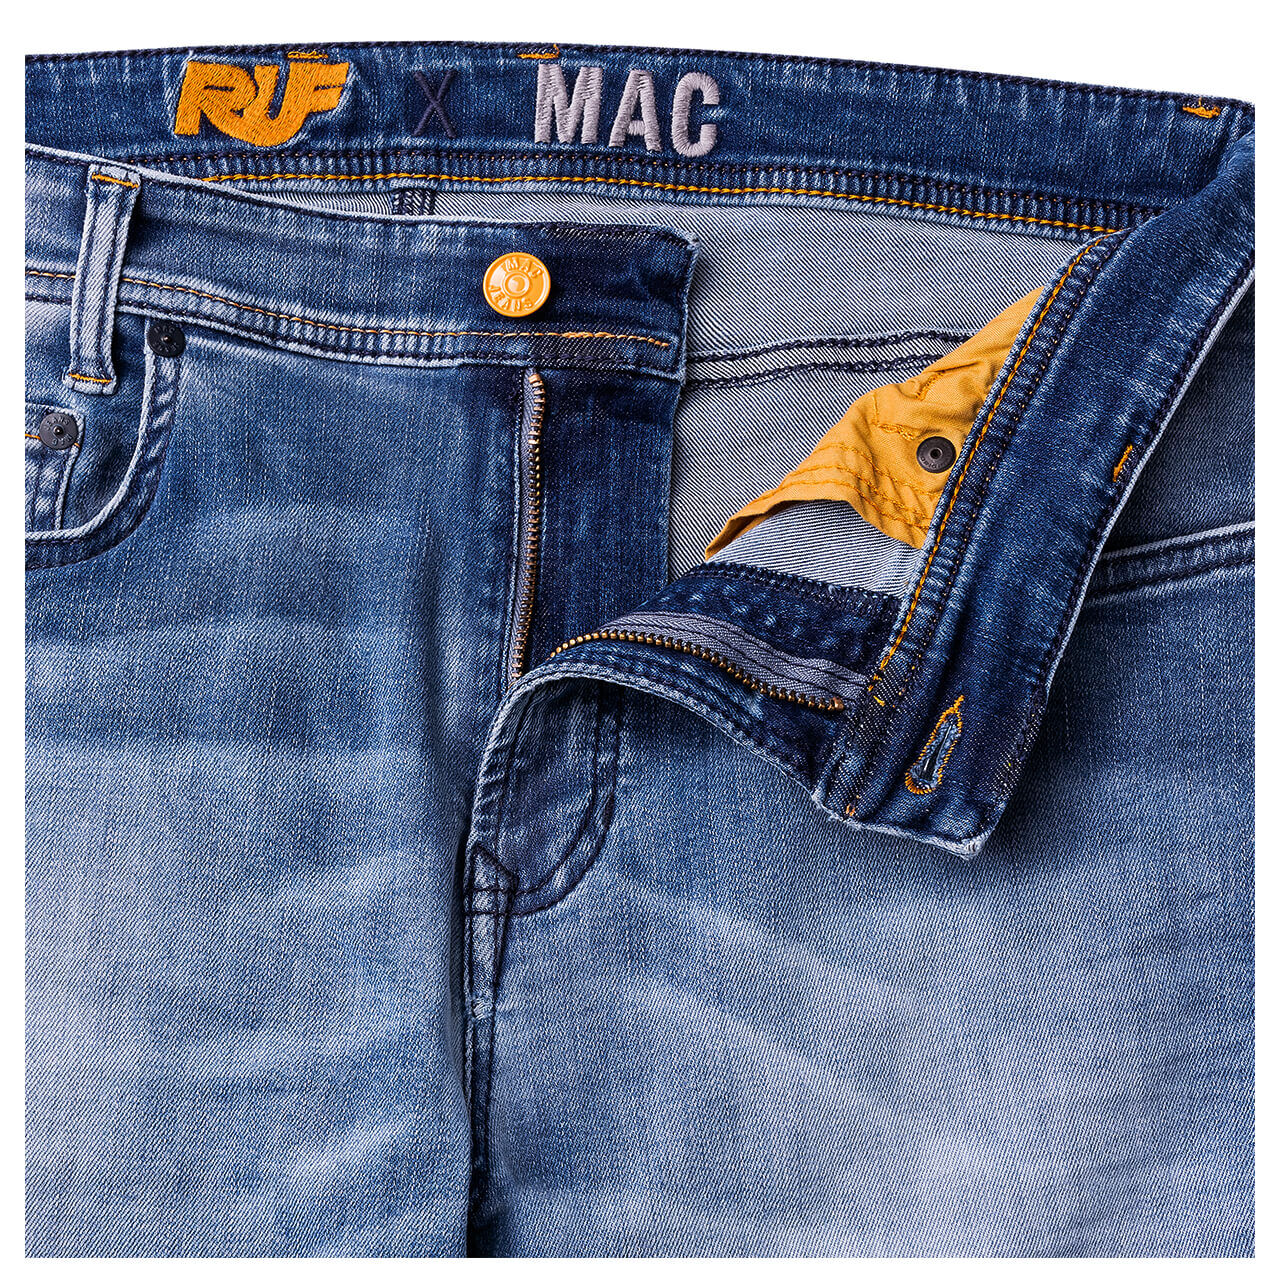 MAC Flexx Jeans venice blue used